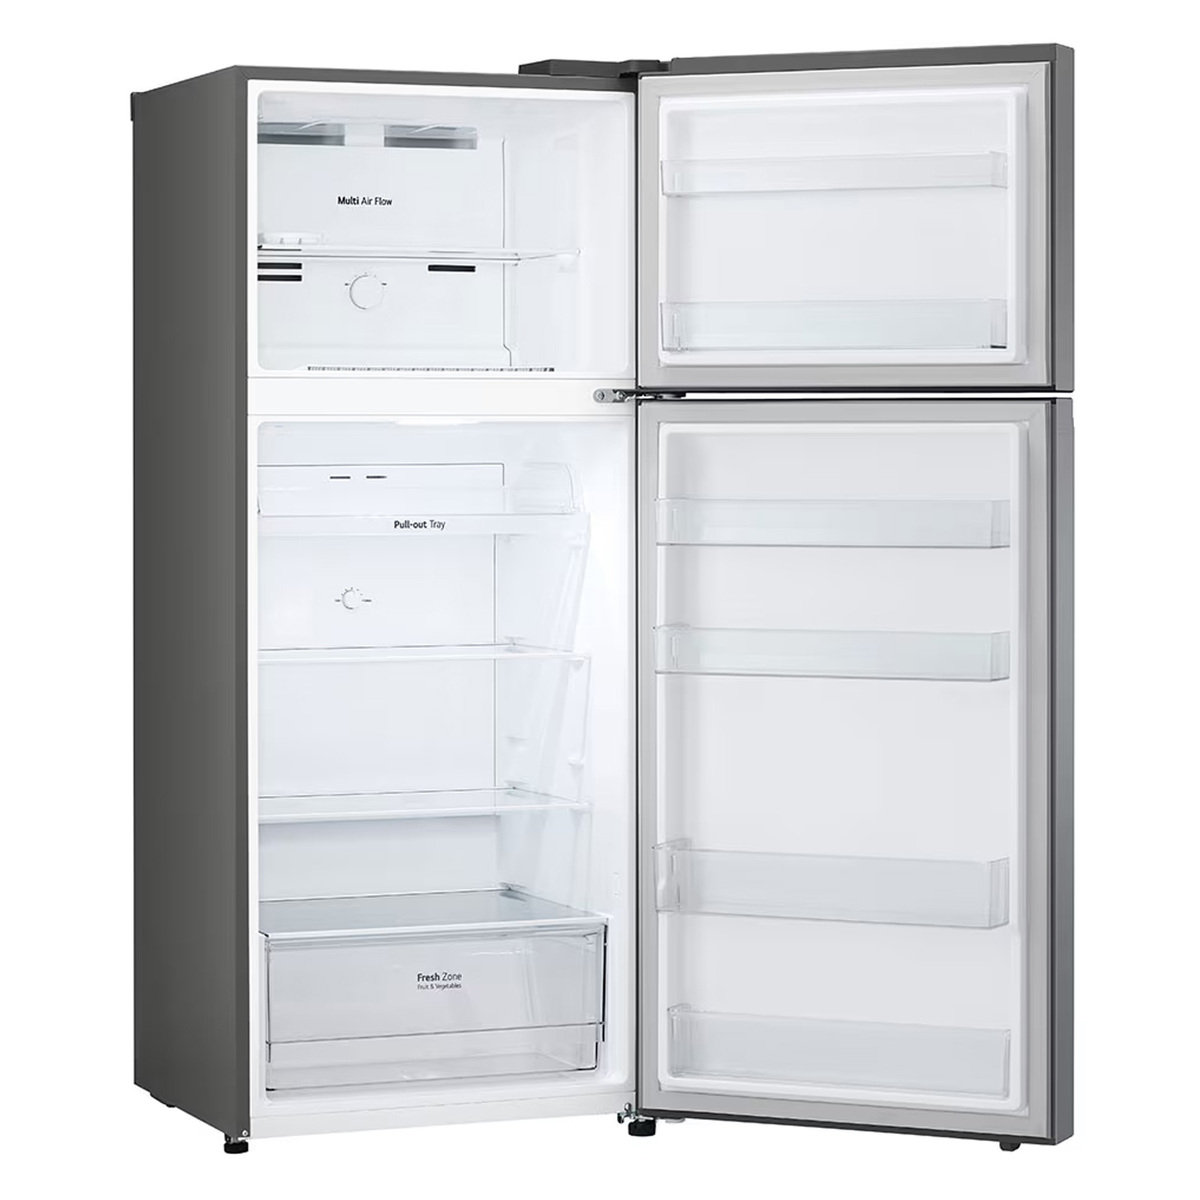 LG Double Door Refrigerator, 410 L, Silver, GN-B482PQMB